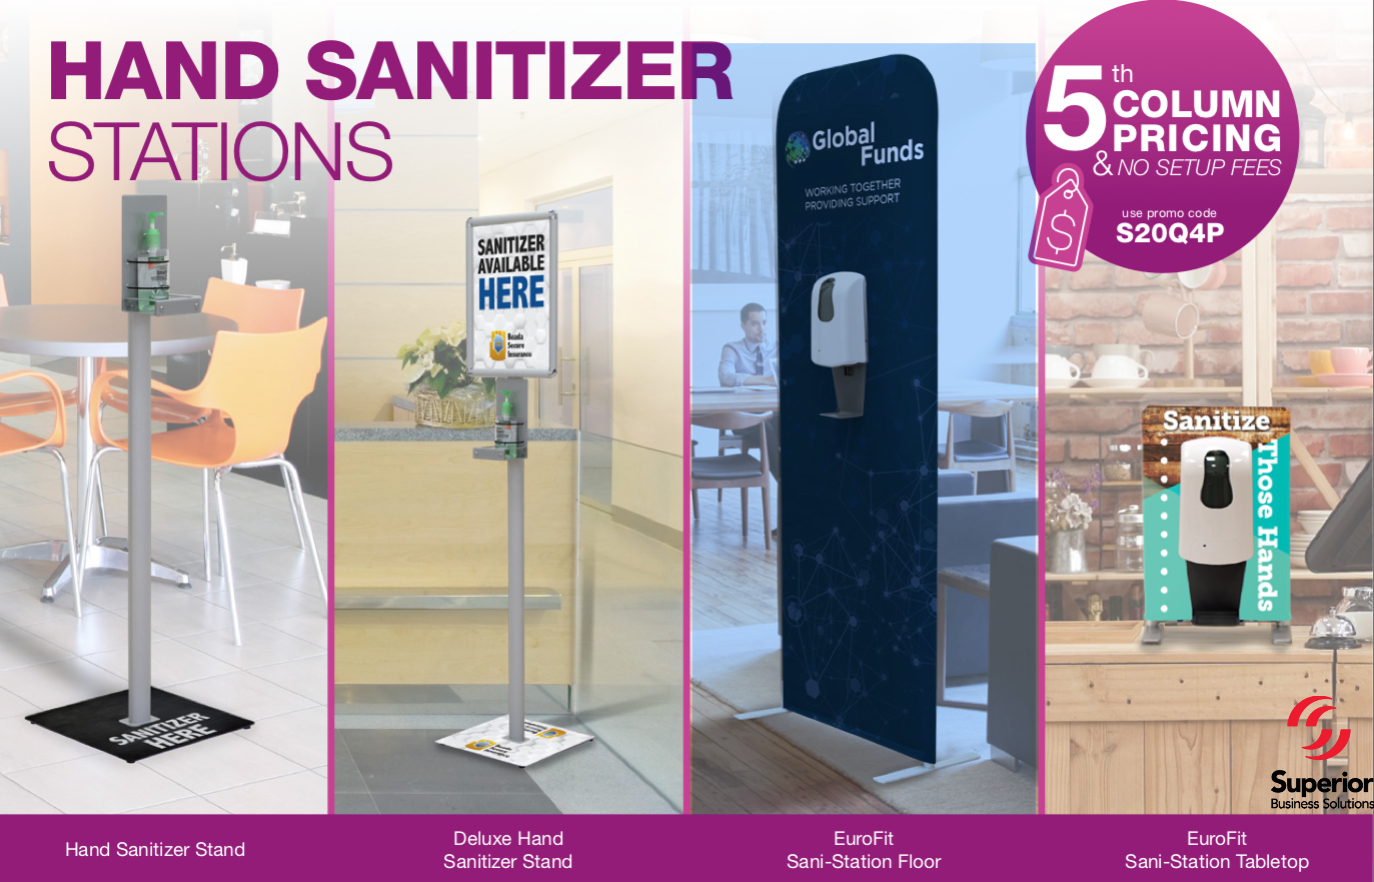 SALE on Hand Sanitizer Stations